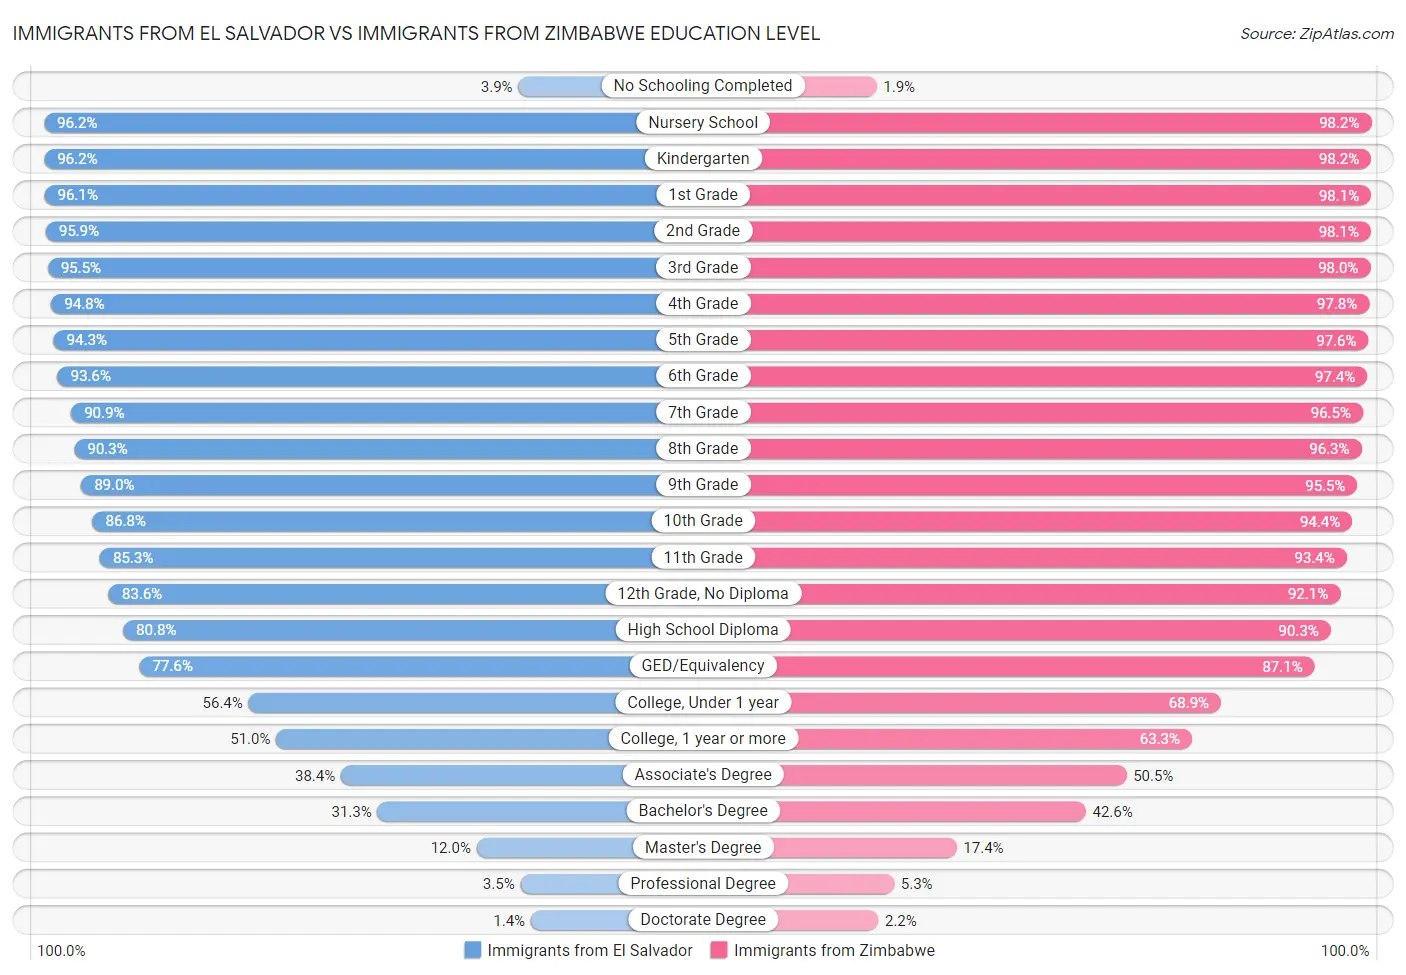 Immigrants from El Salvador vs Immigrants from Zimbabwe Education Level